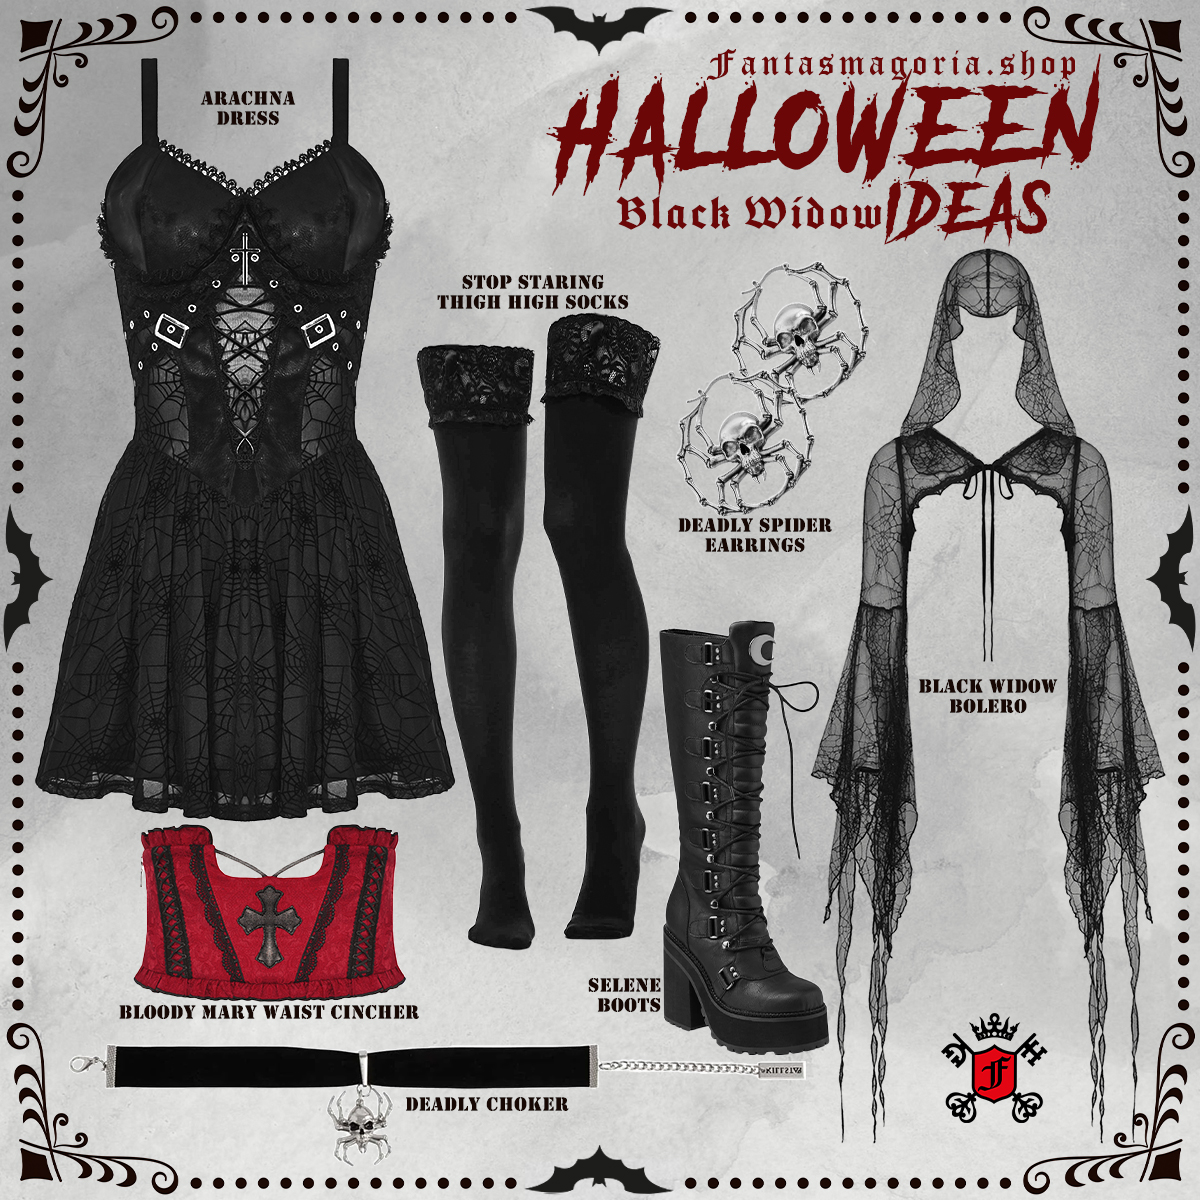 Promotional image showcasing Fantasmagoria's Halloween Black Widow fashion collection